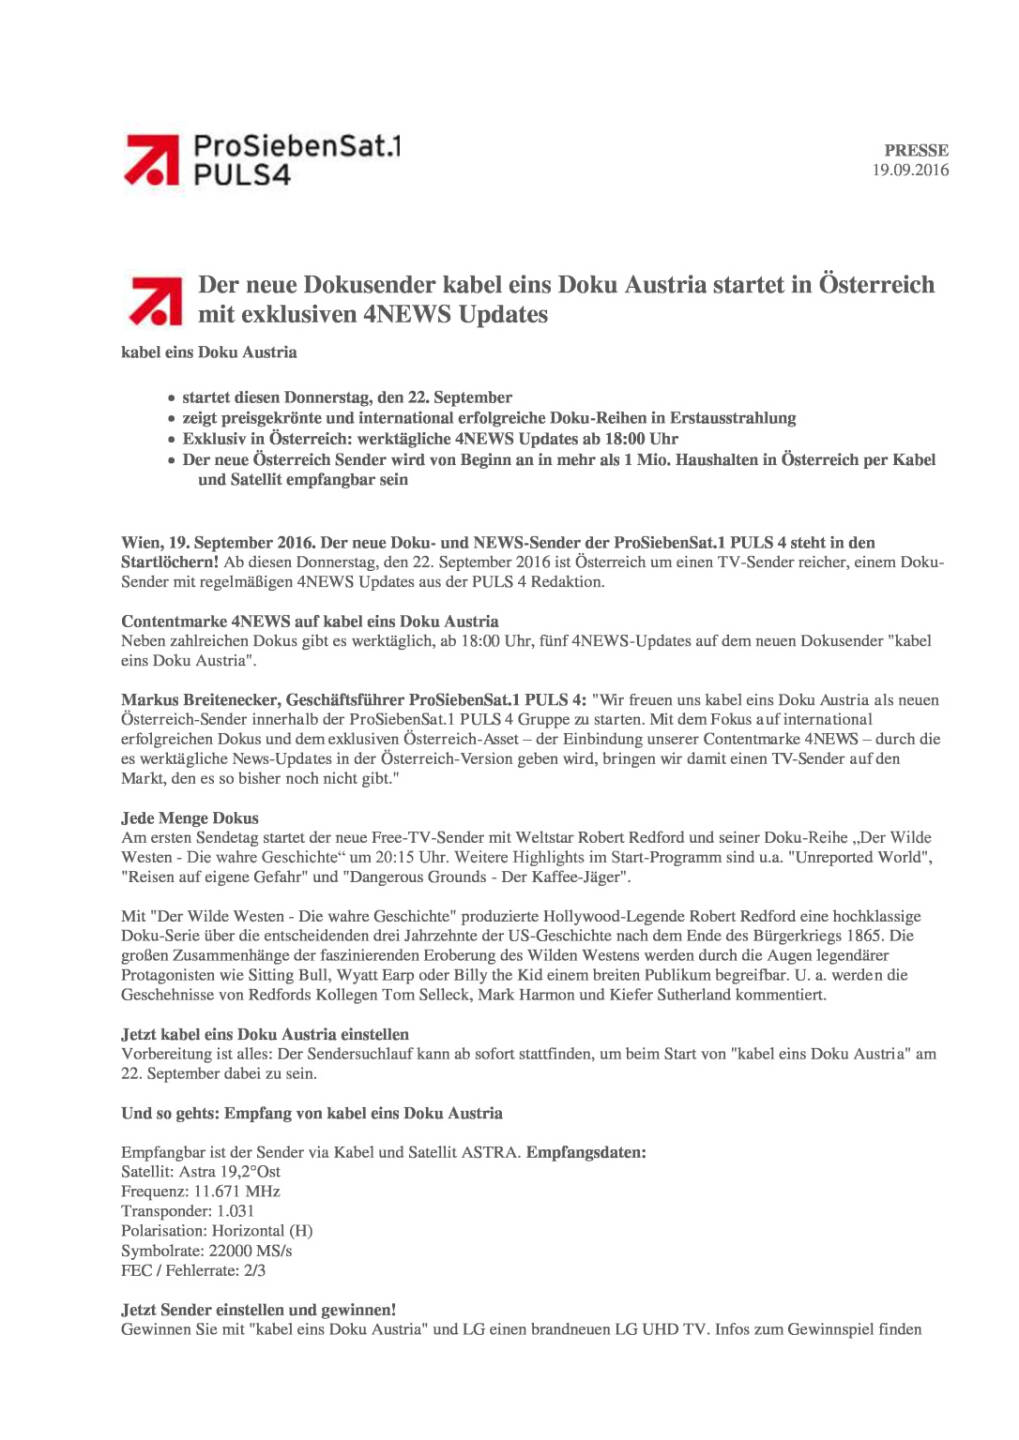 ProSiebenSat.1Puls4: Neuer Dokusender kabel eins Doku Austria, Seite 1/3, komplettes Dokument unter http://boerse-social.com/static/uploads/file_1793_prosiebensat1puls4_neuer_dokusender_kabel_eins_doku_austria.pdf